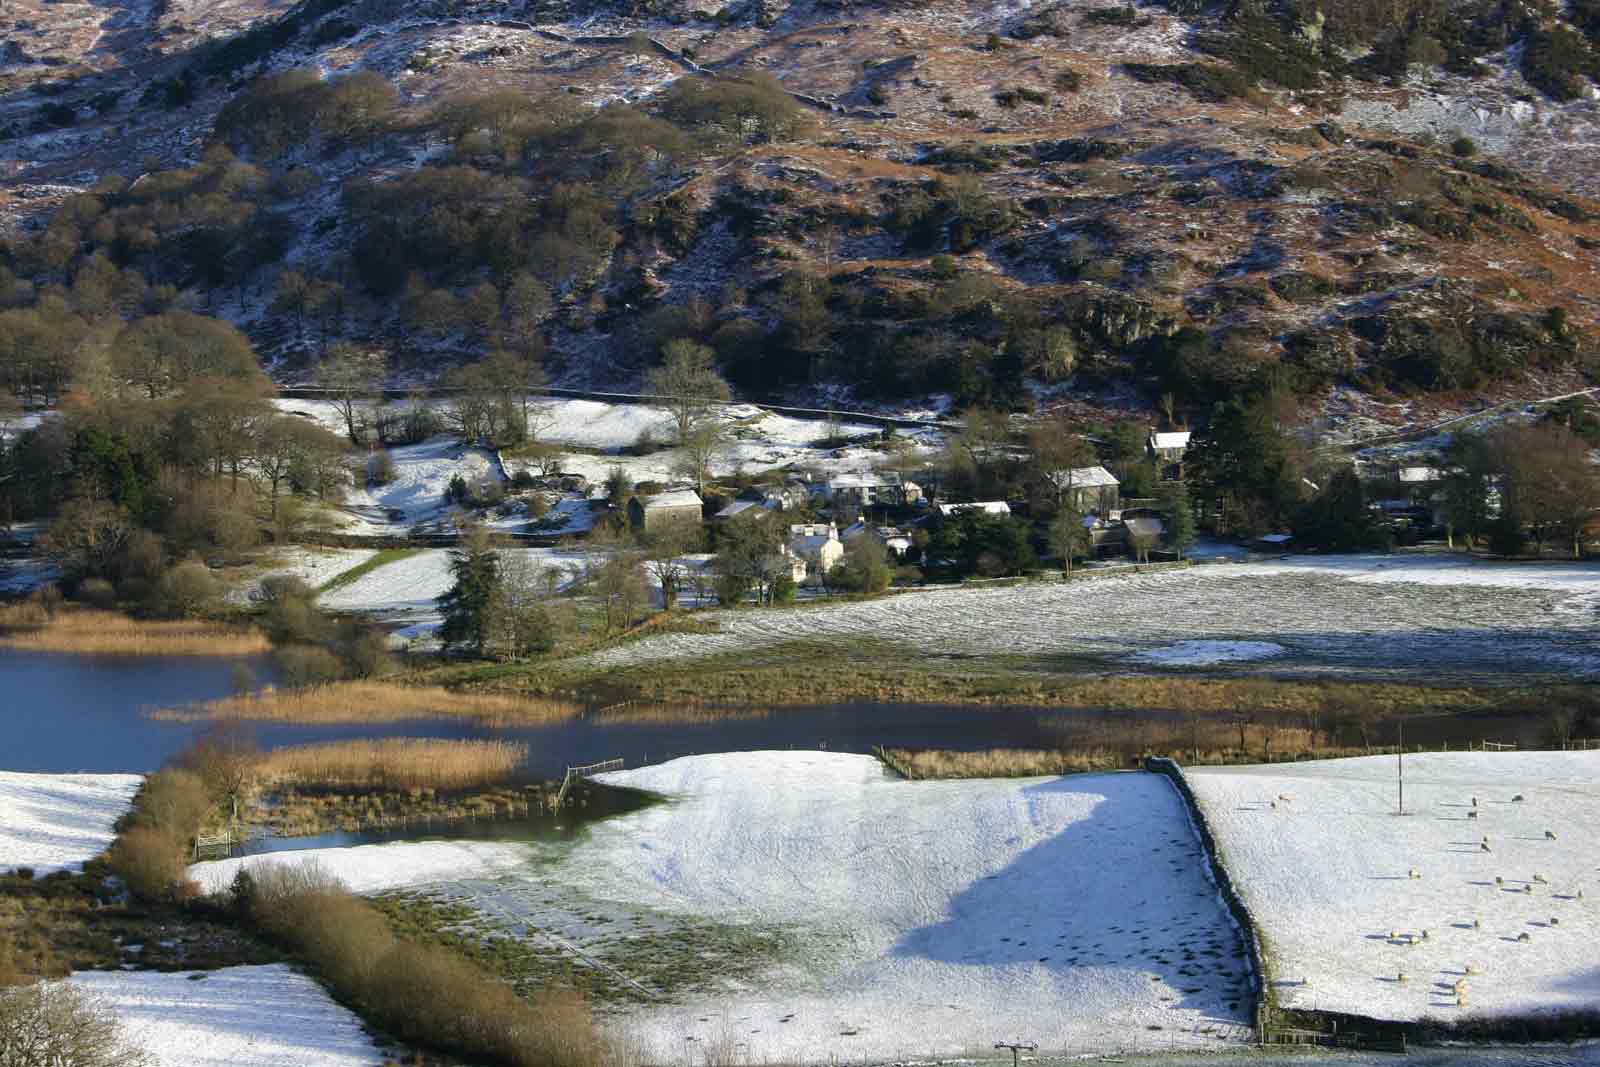 View of village in winter